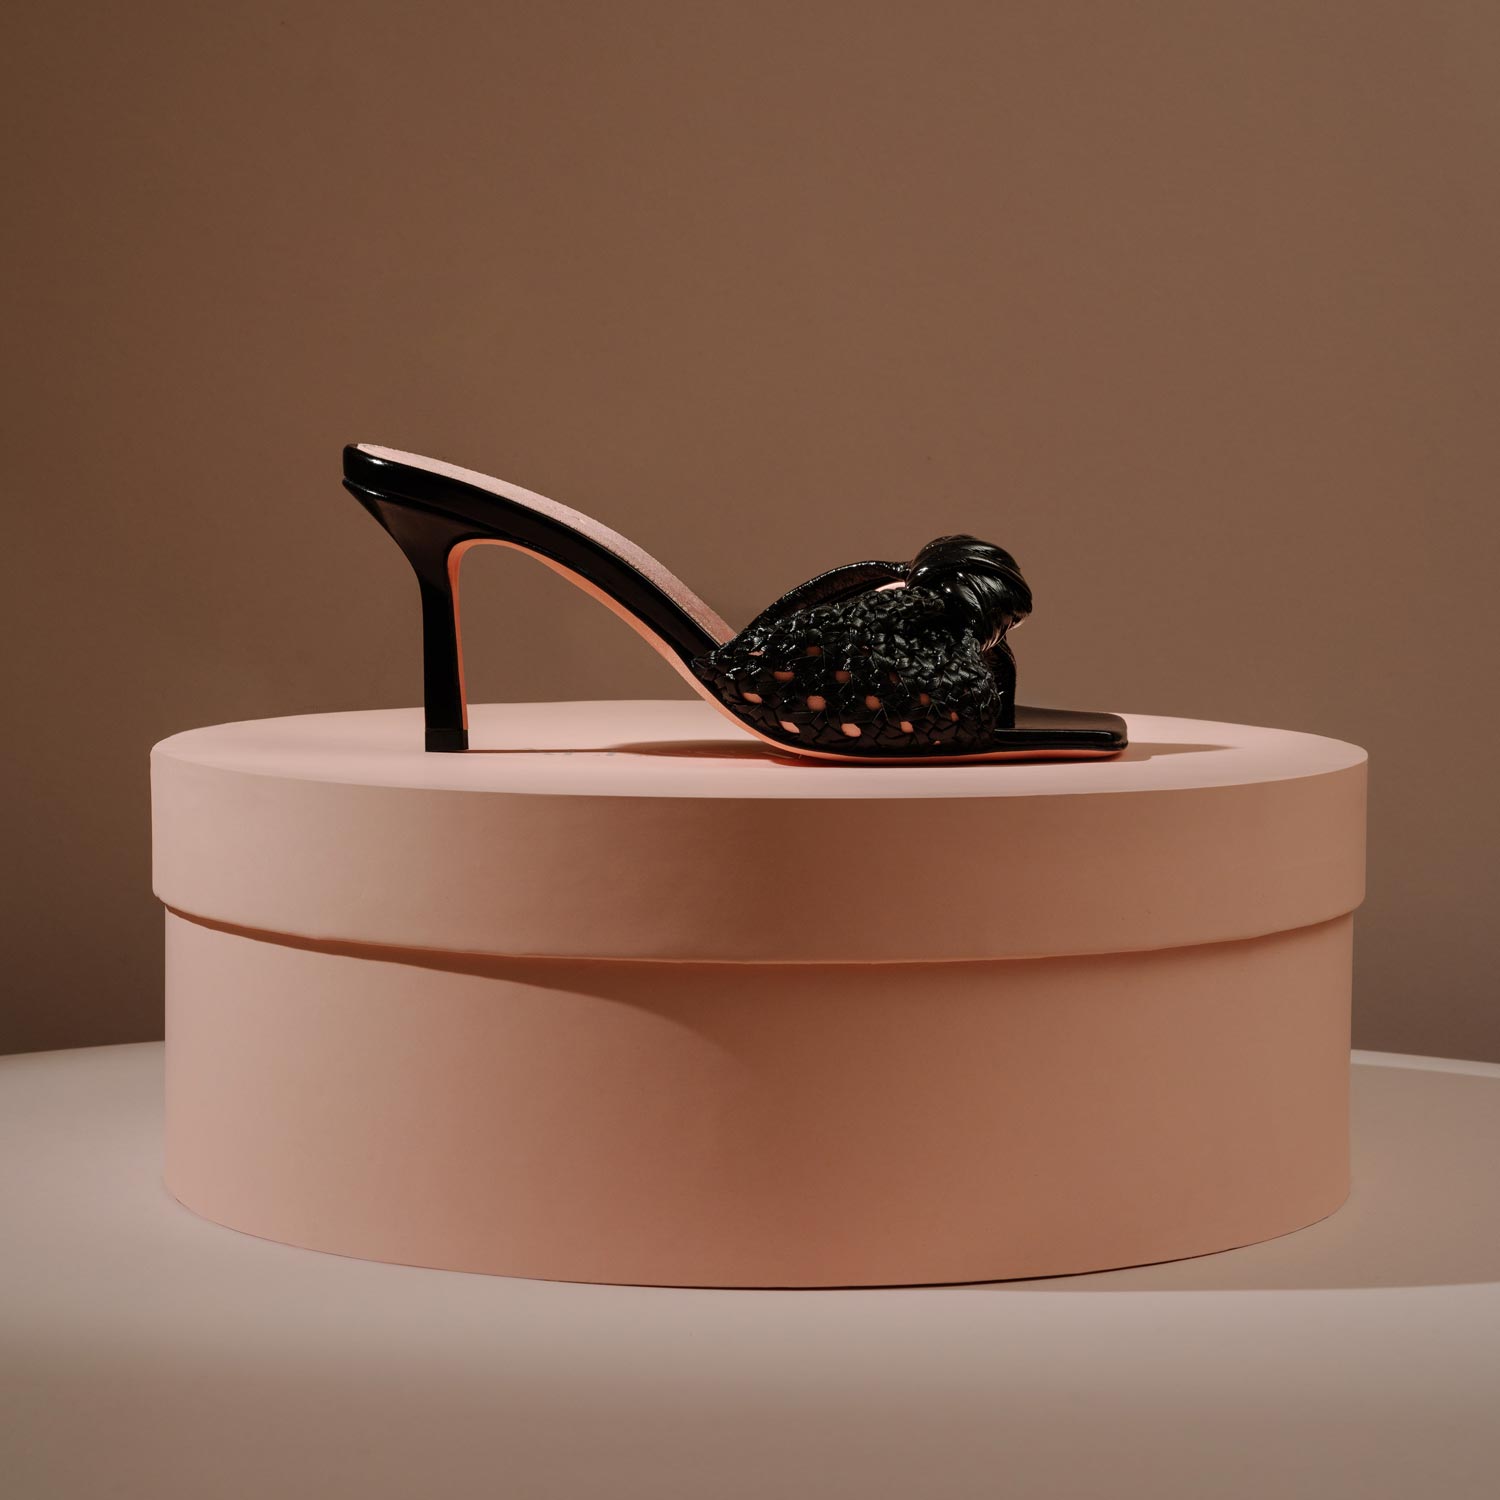 Sandalo Paloma nero vista laterale esterna packaging rosa